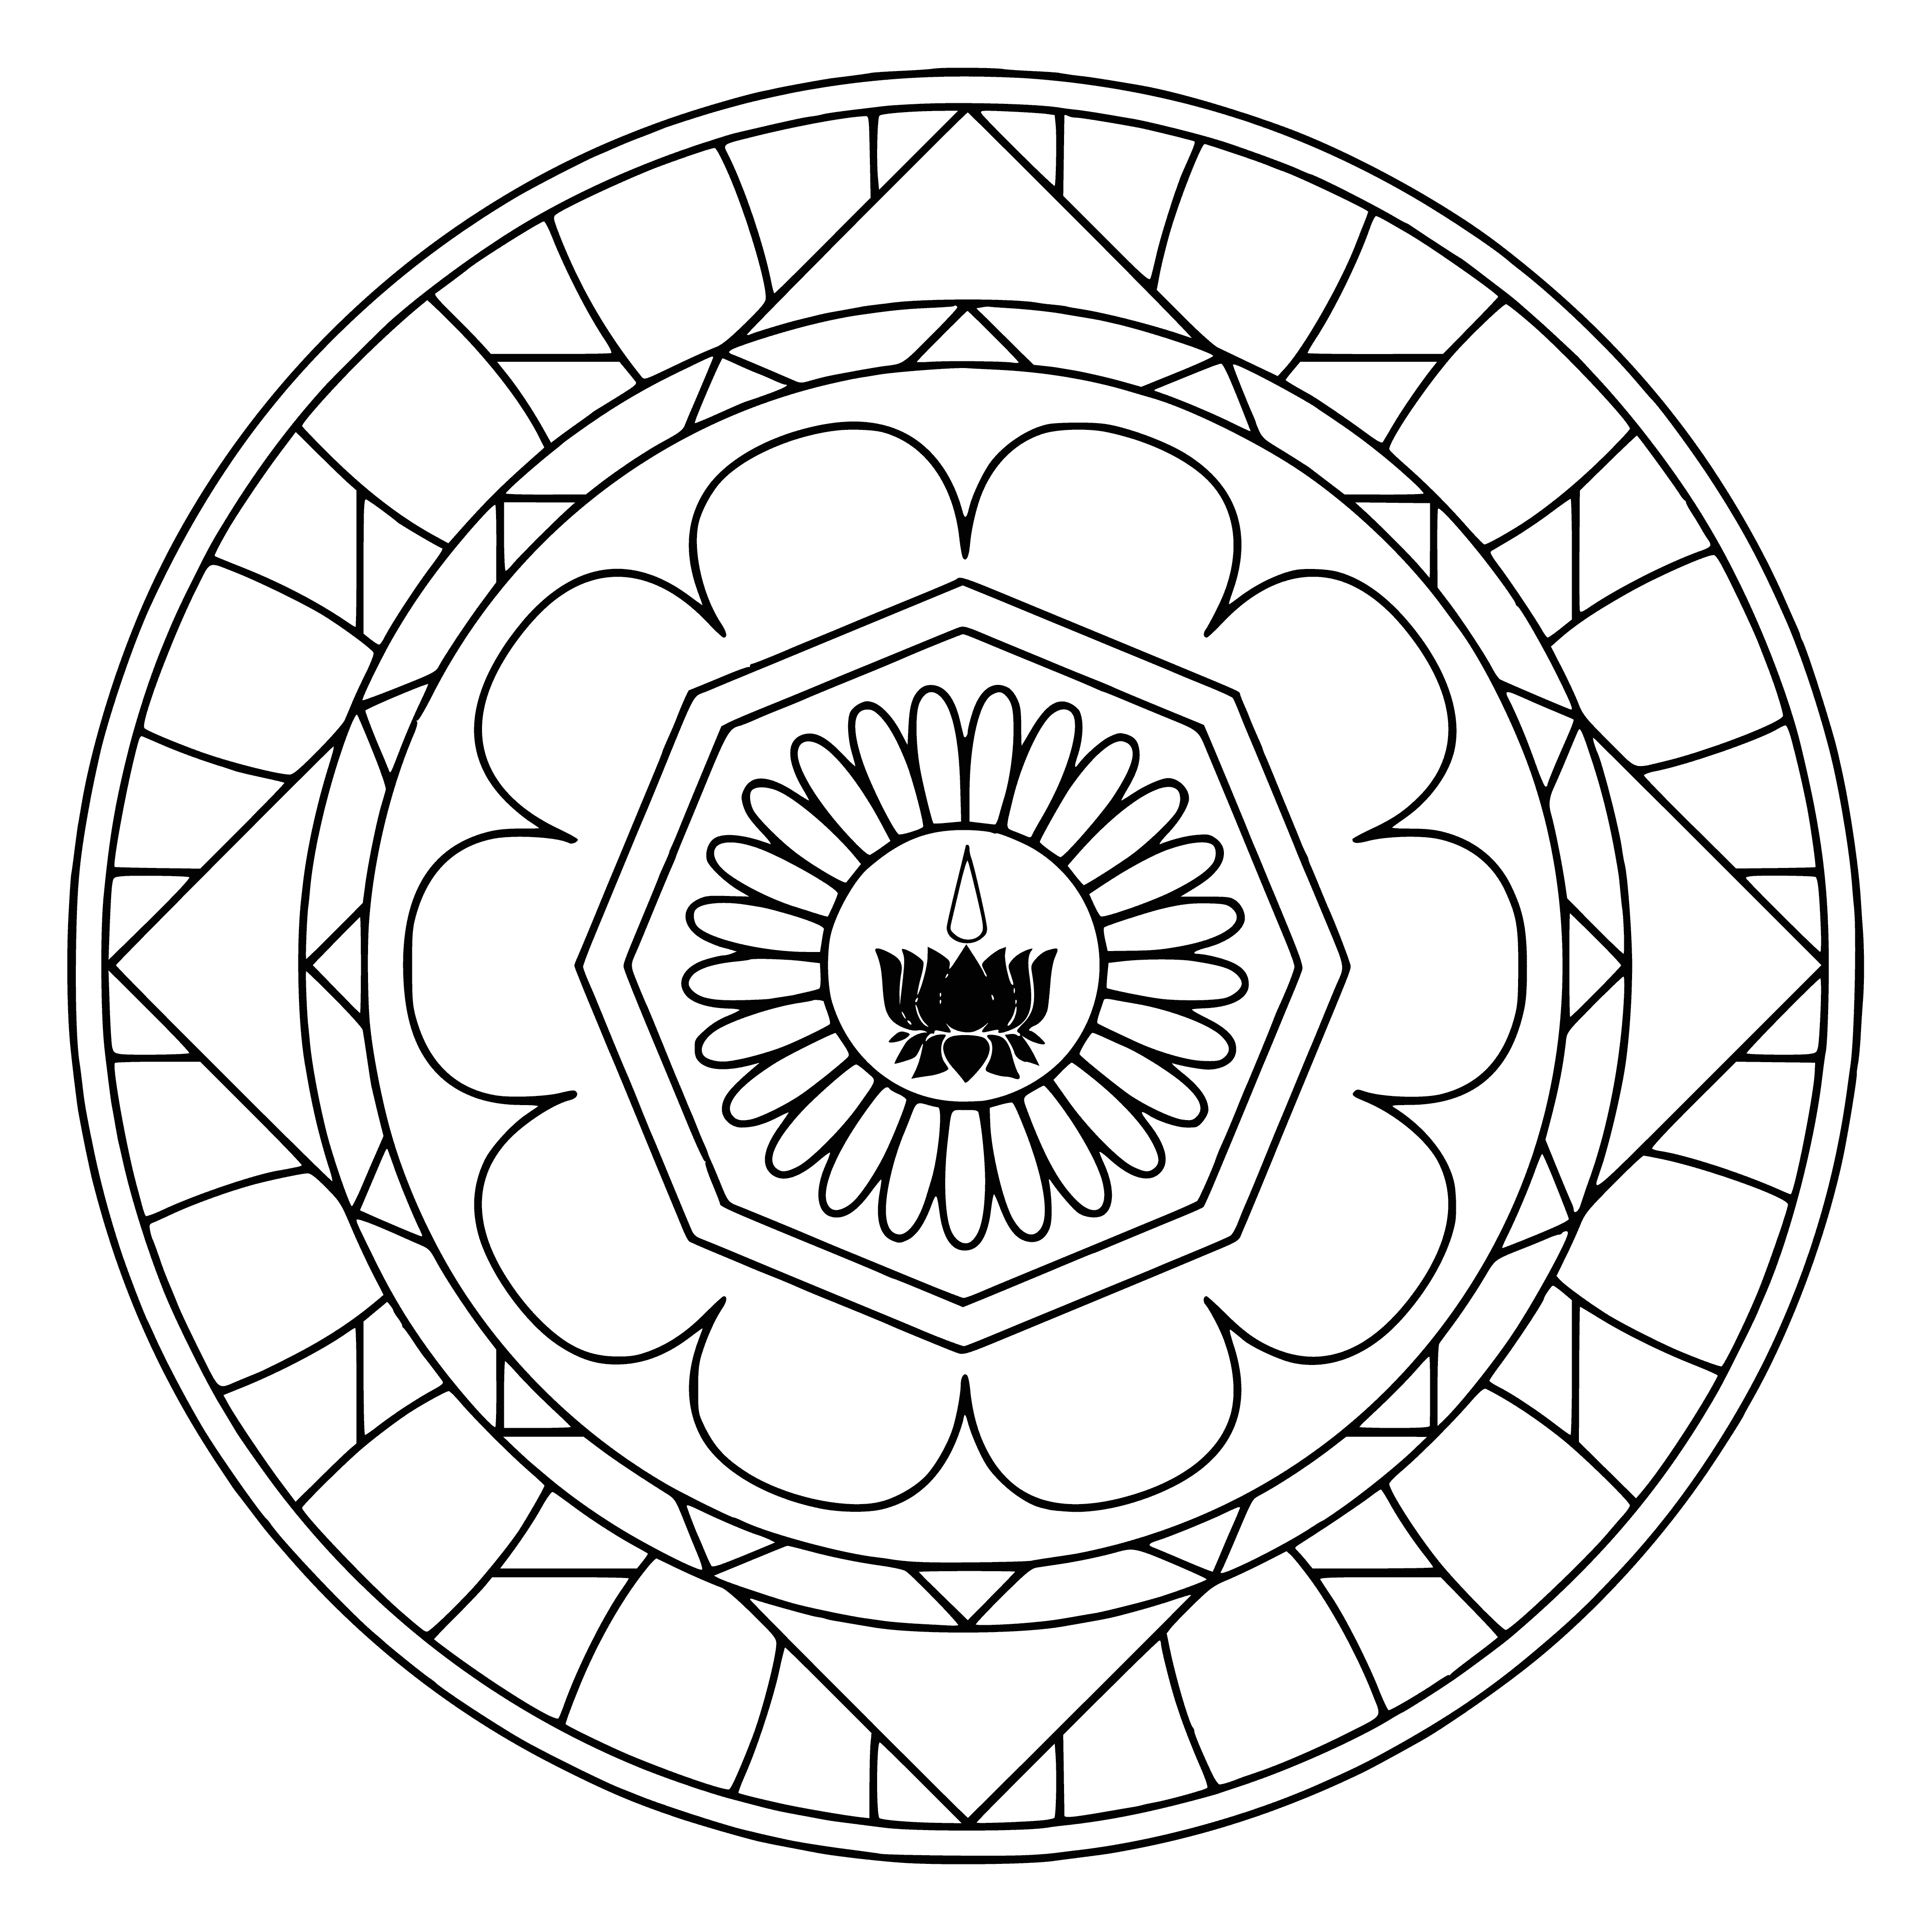 Mandala with Ayyavazhi symbol coloring page